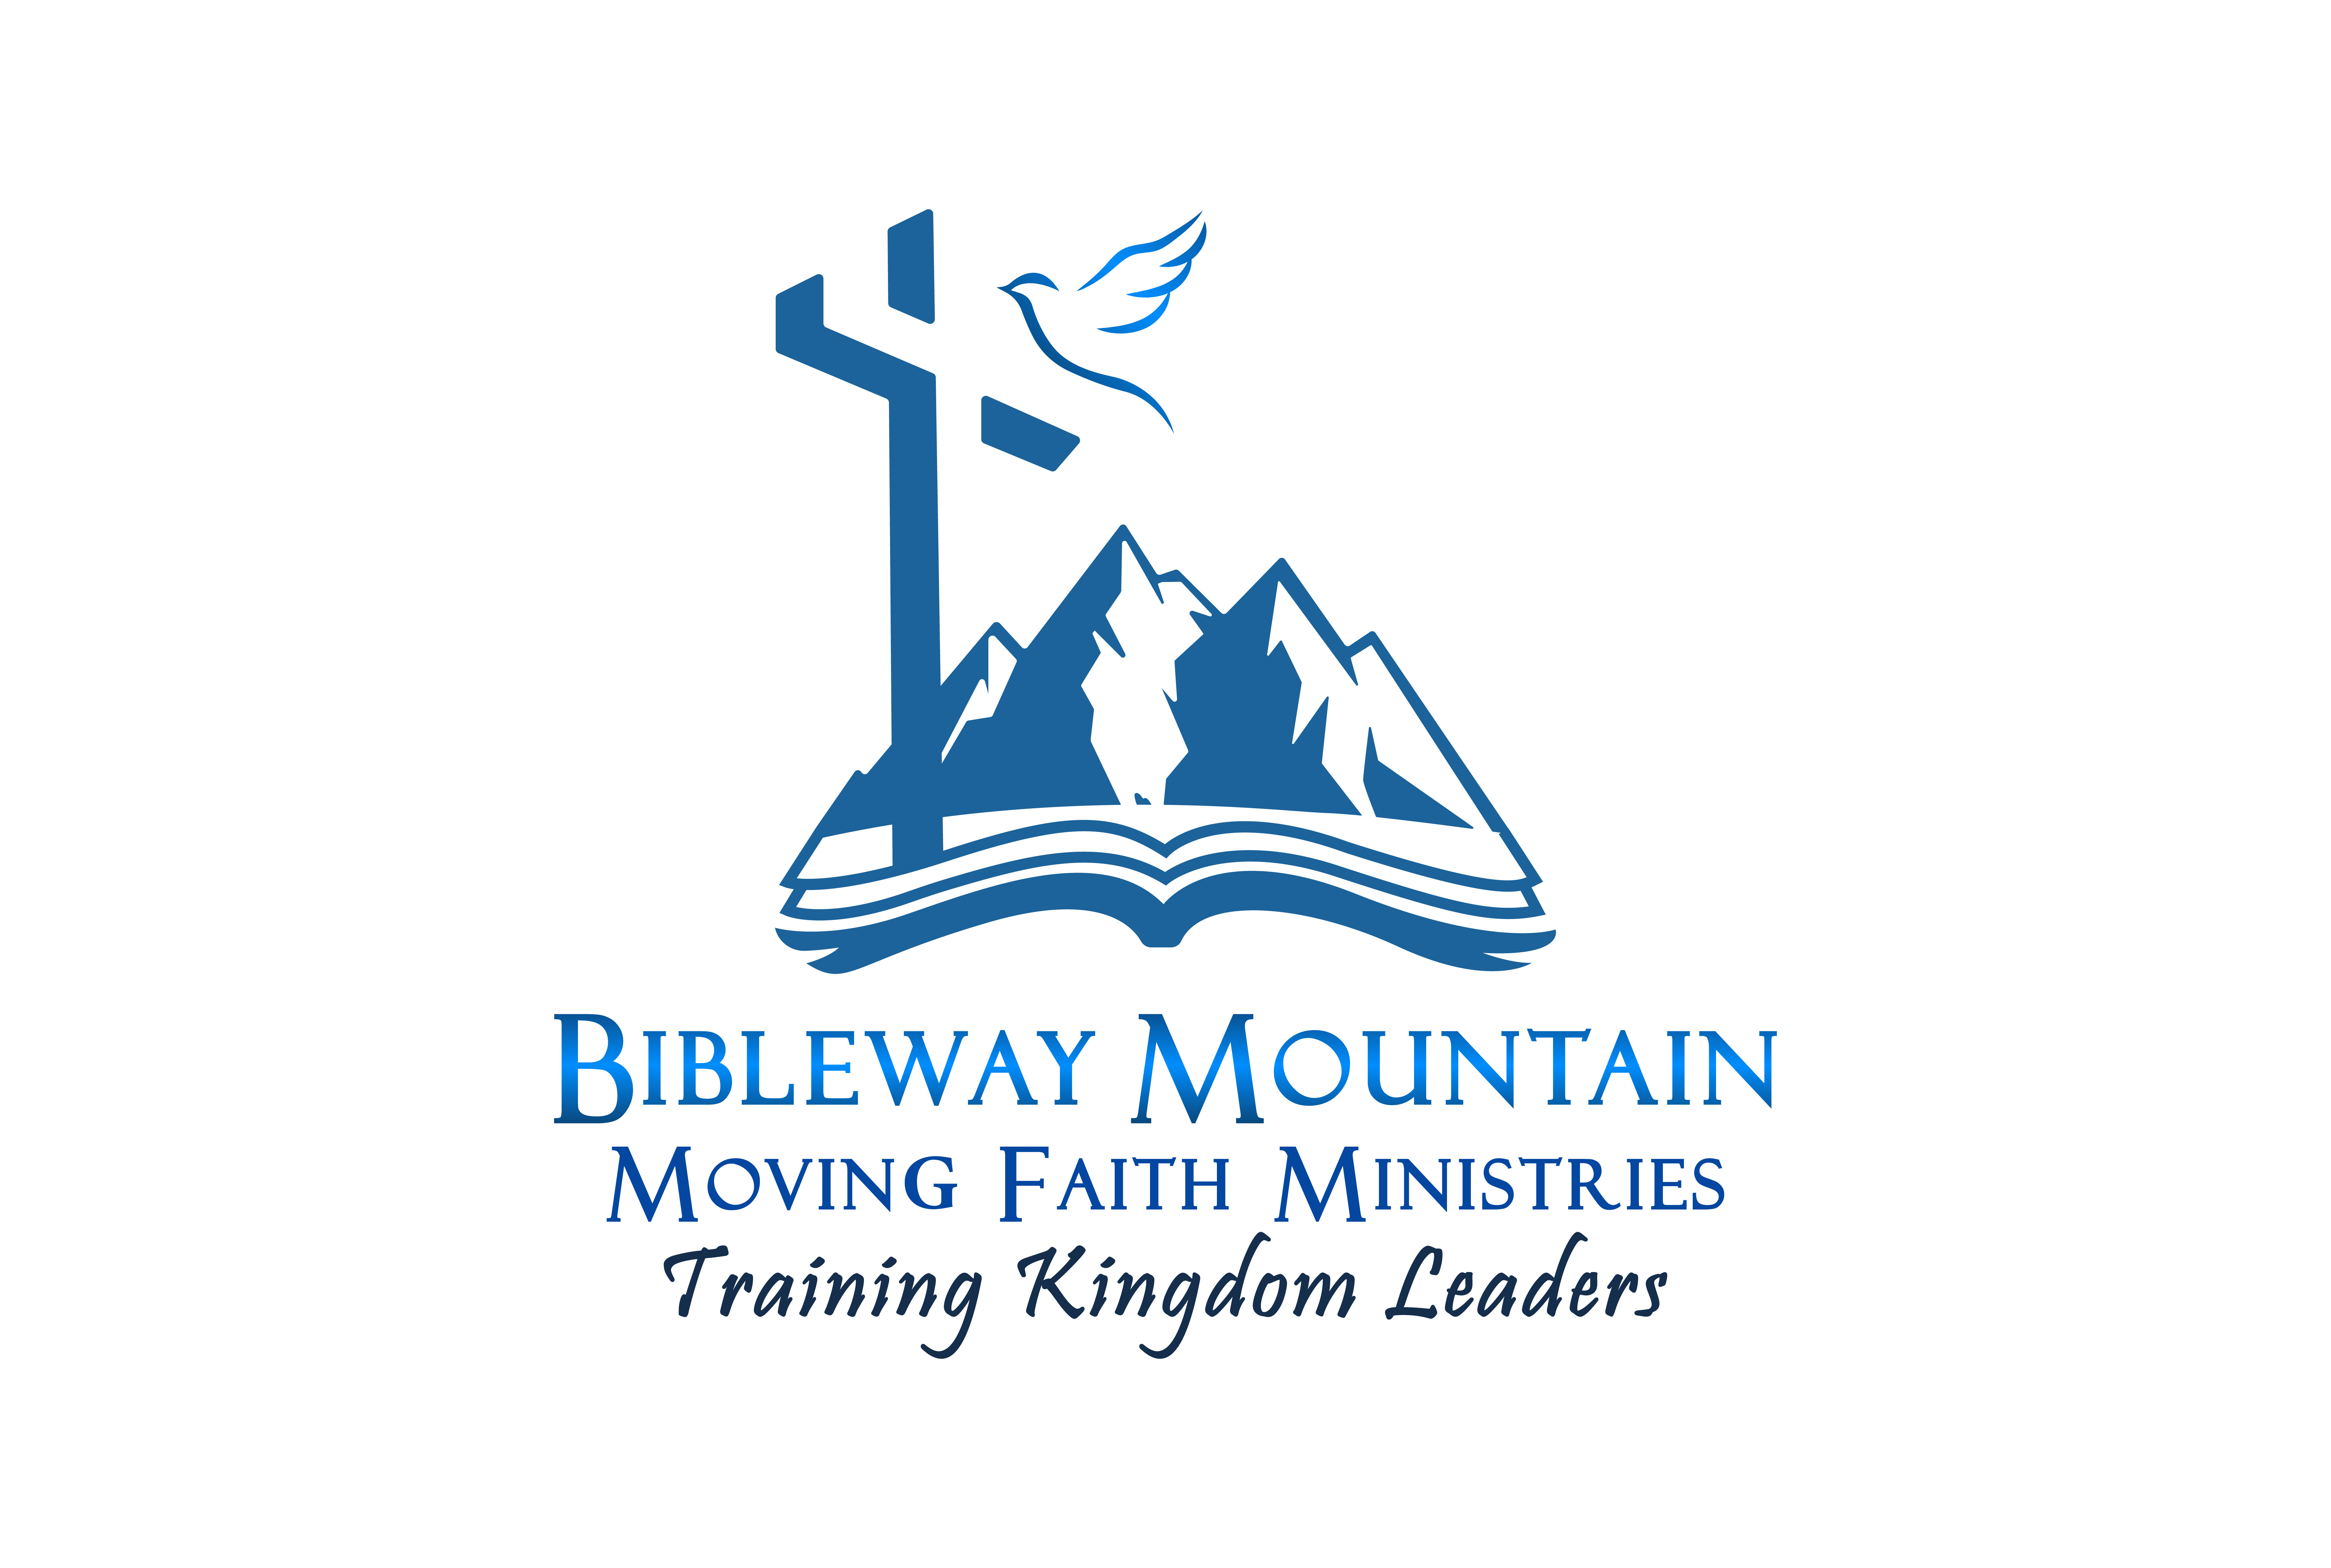 The Bibleway Mountain Moving Faith Ministries